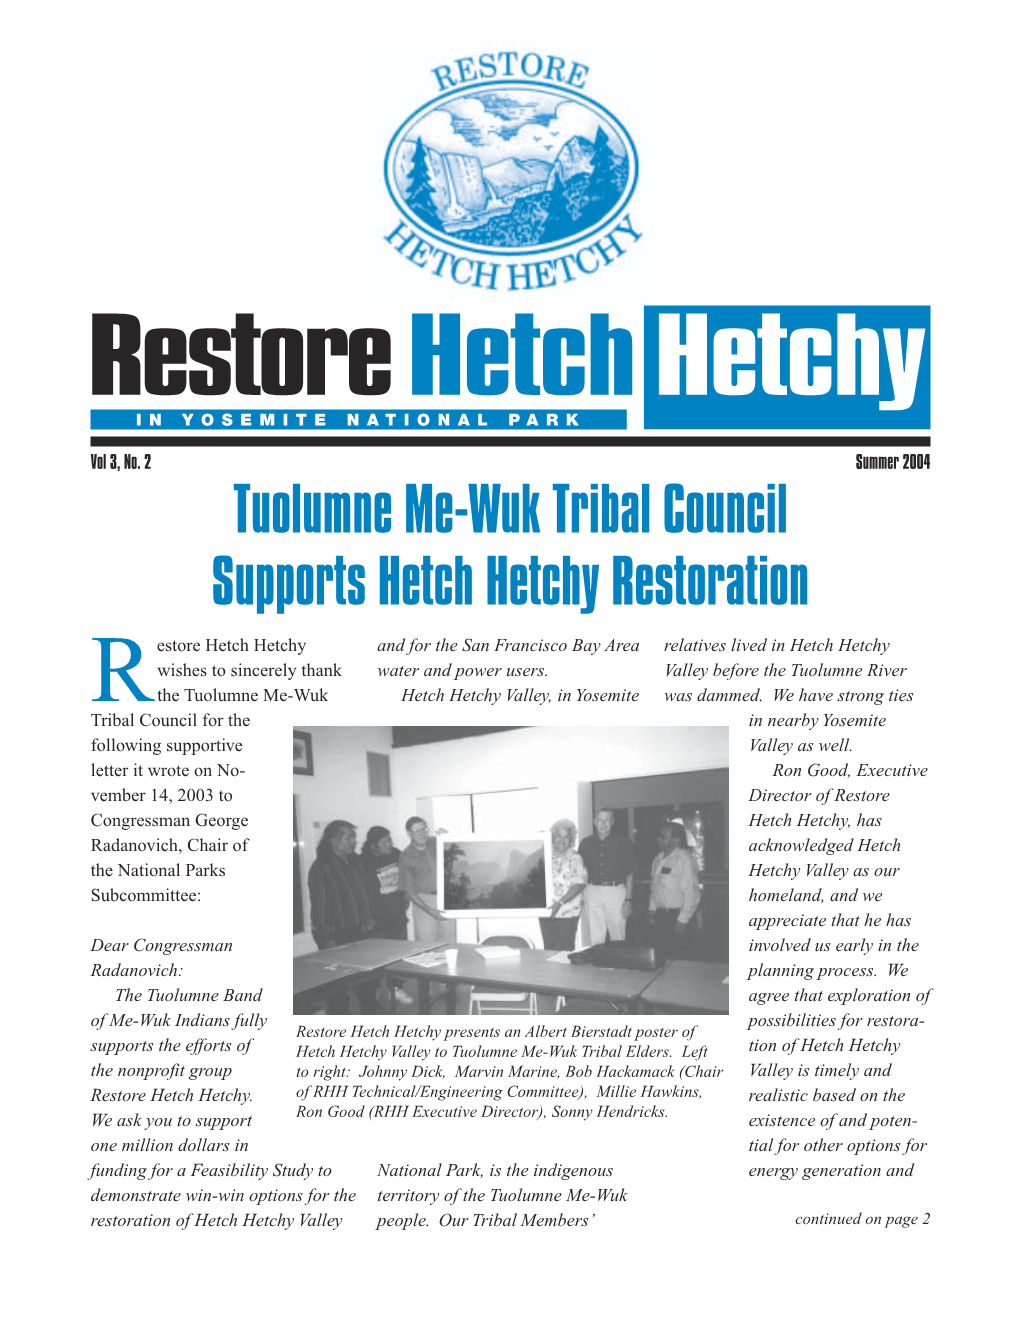 Tuolumne Me-Wuk Tribal Council Supports Hetch Hetchy Restoration